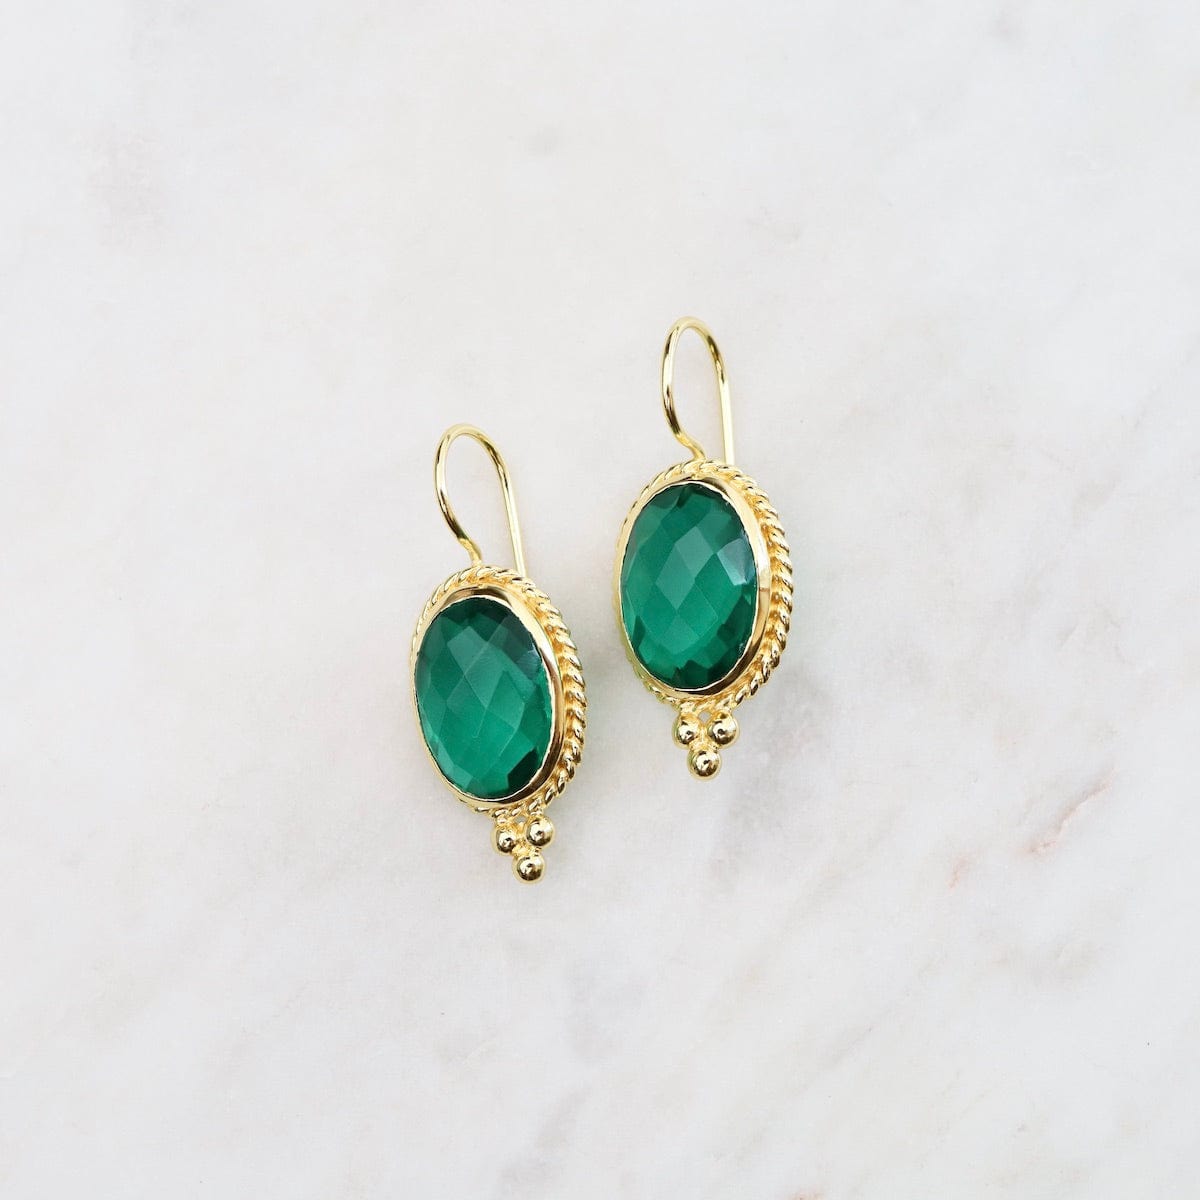 EAR-GPL Boho Earrings Gold with Green Tourmaline